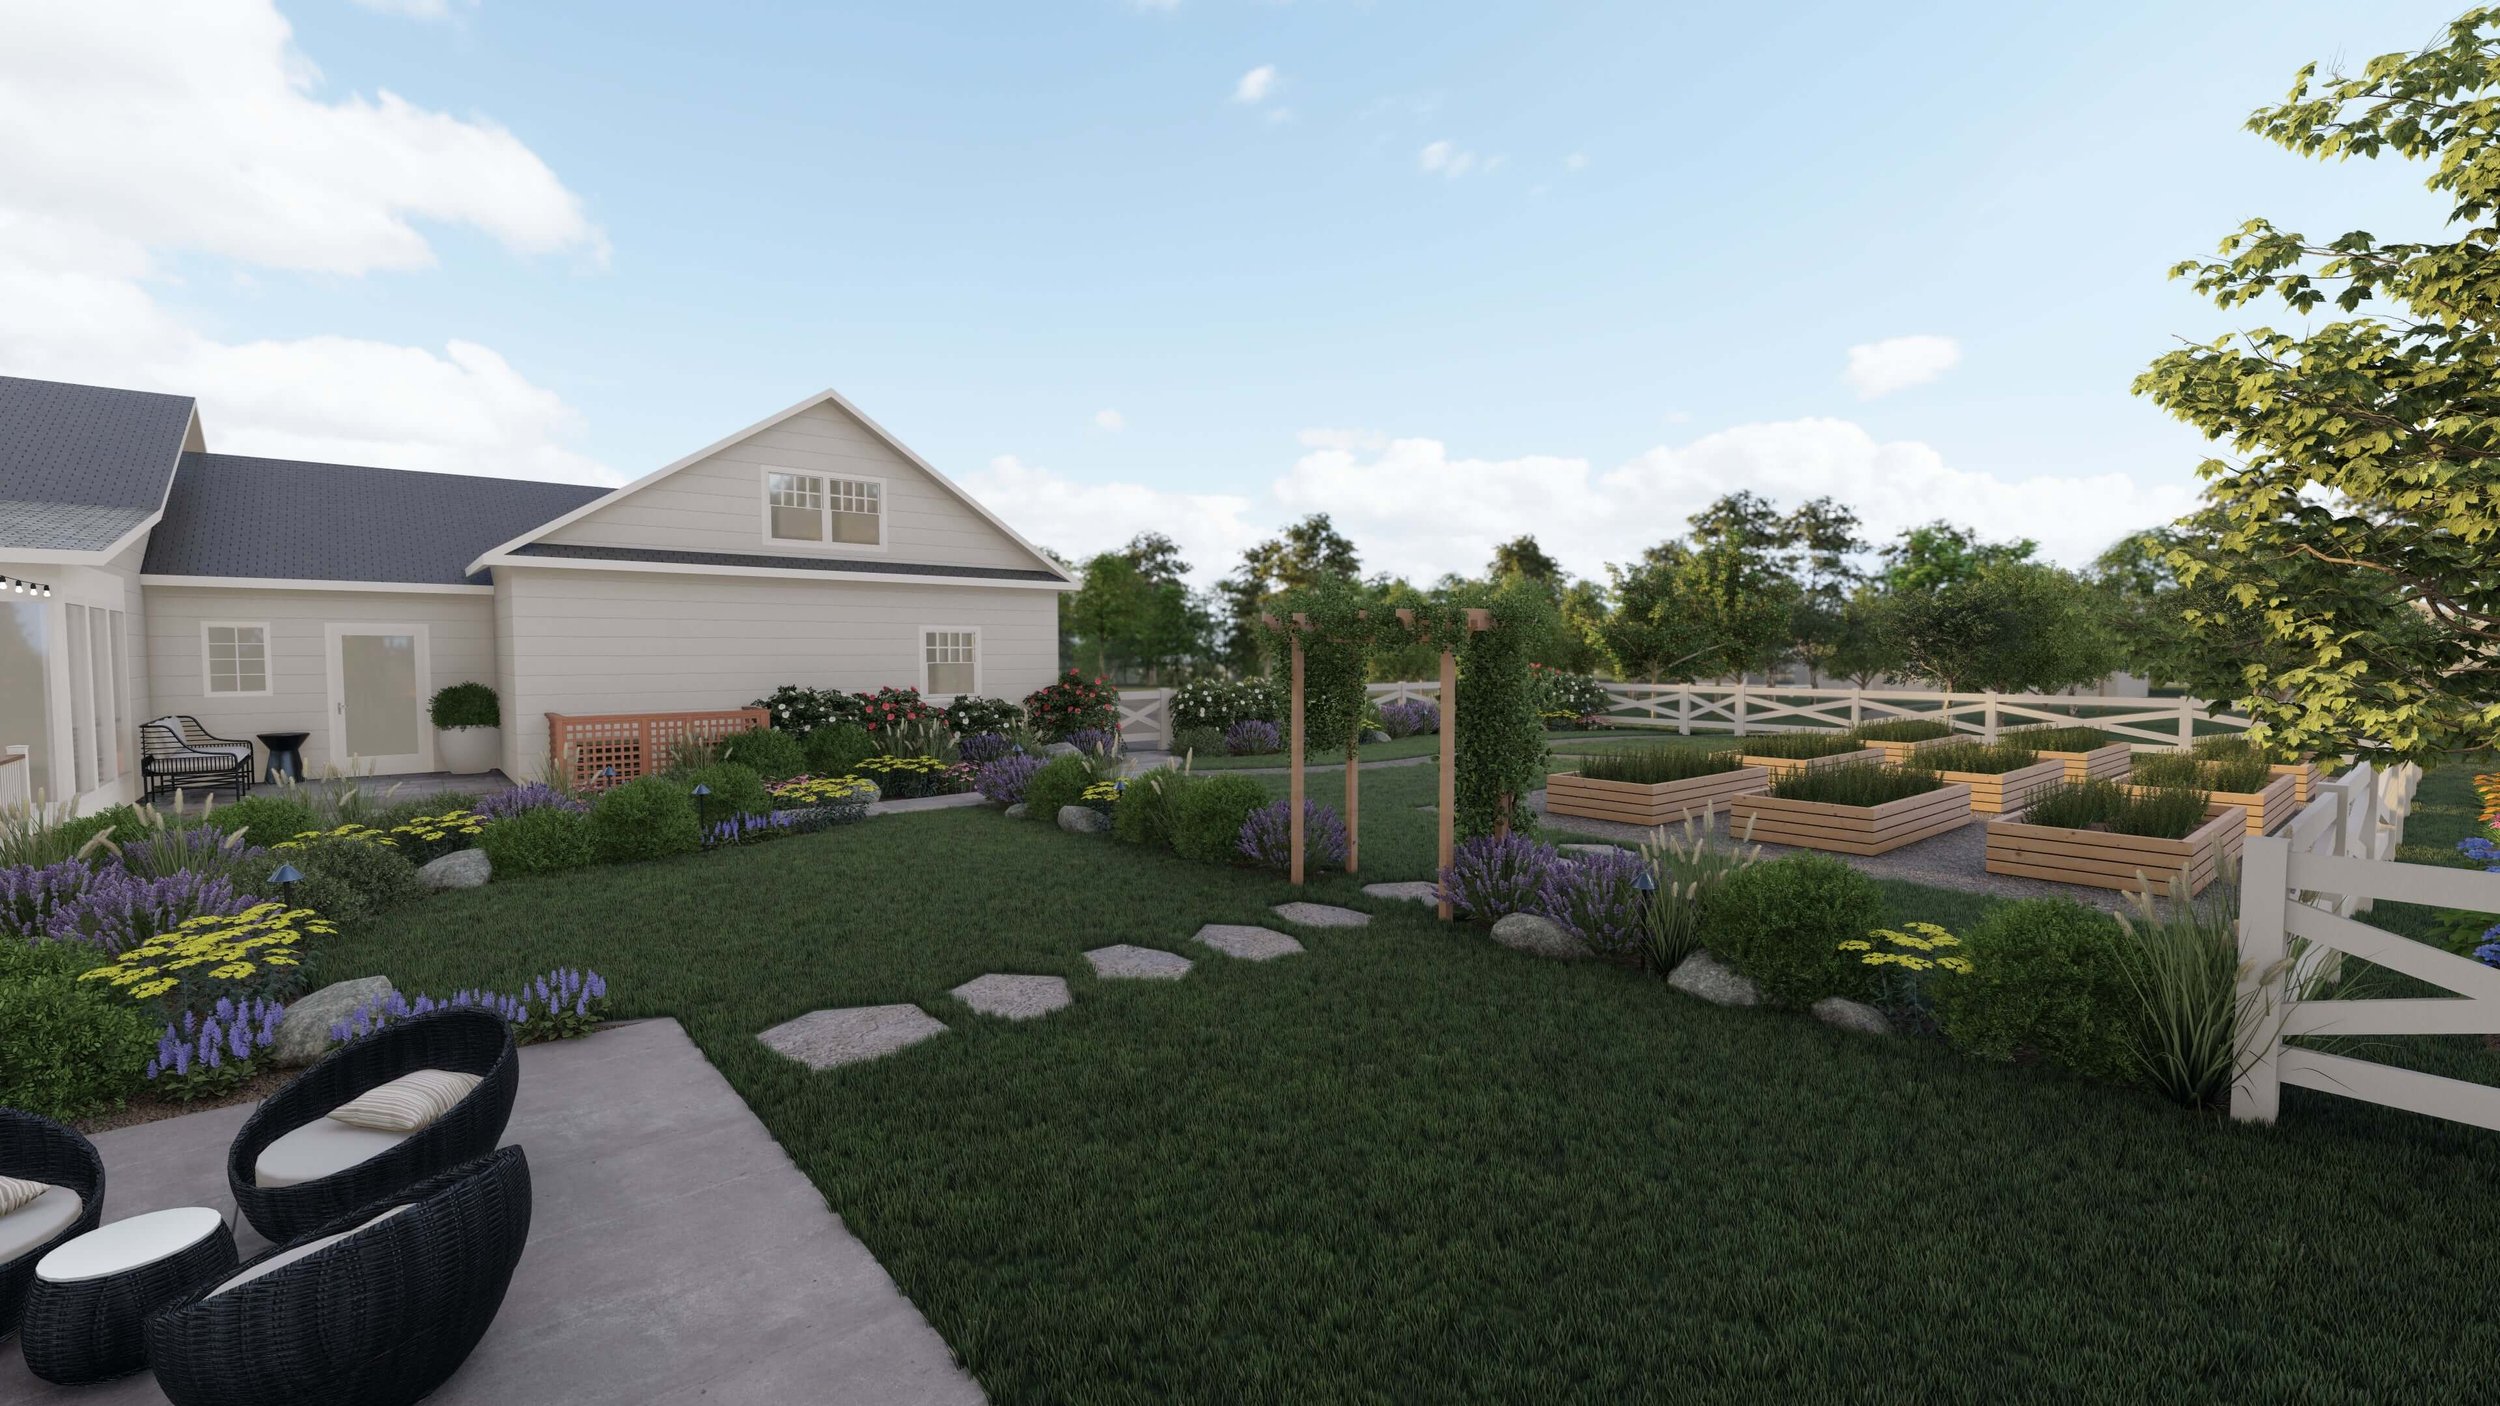 Large plot of raised garden beds in Pennsylvania backyard landscape design